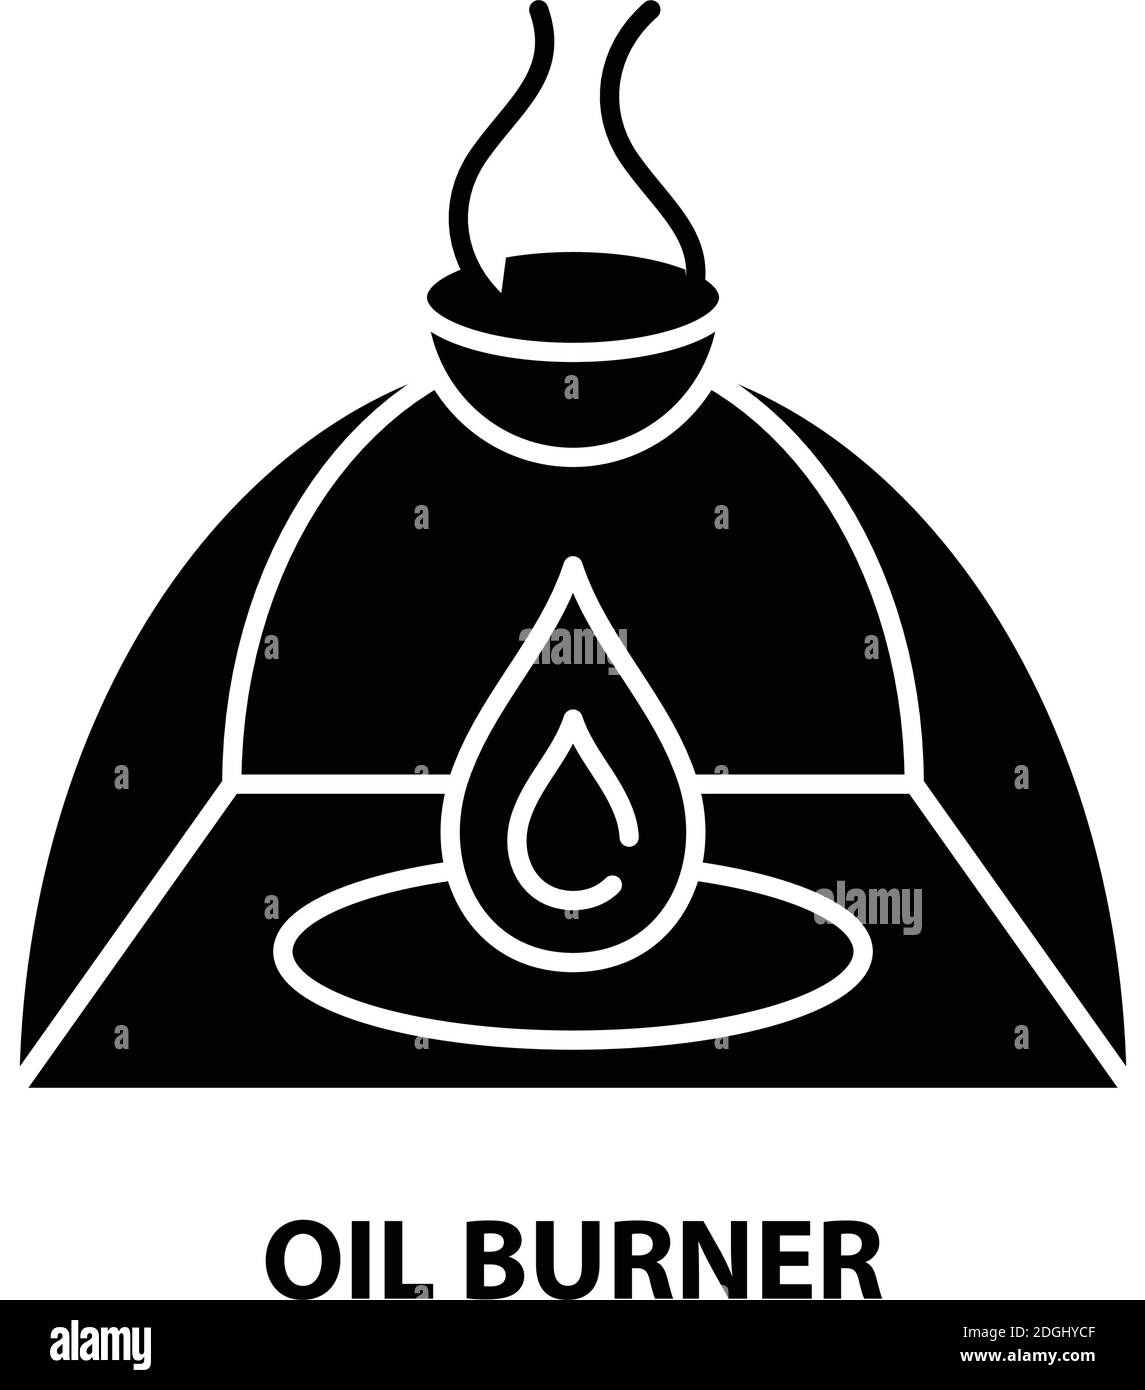 oil burner icon, black vector sign with editable strokes, concept illustration Stock Vector